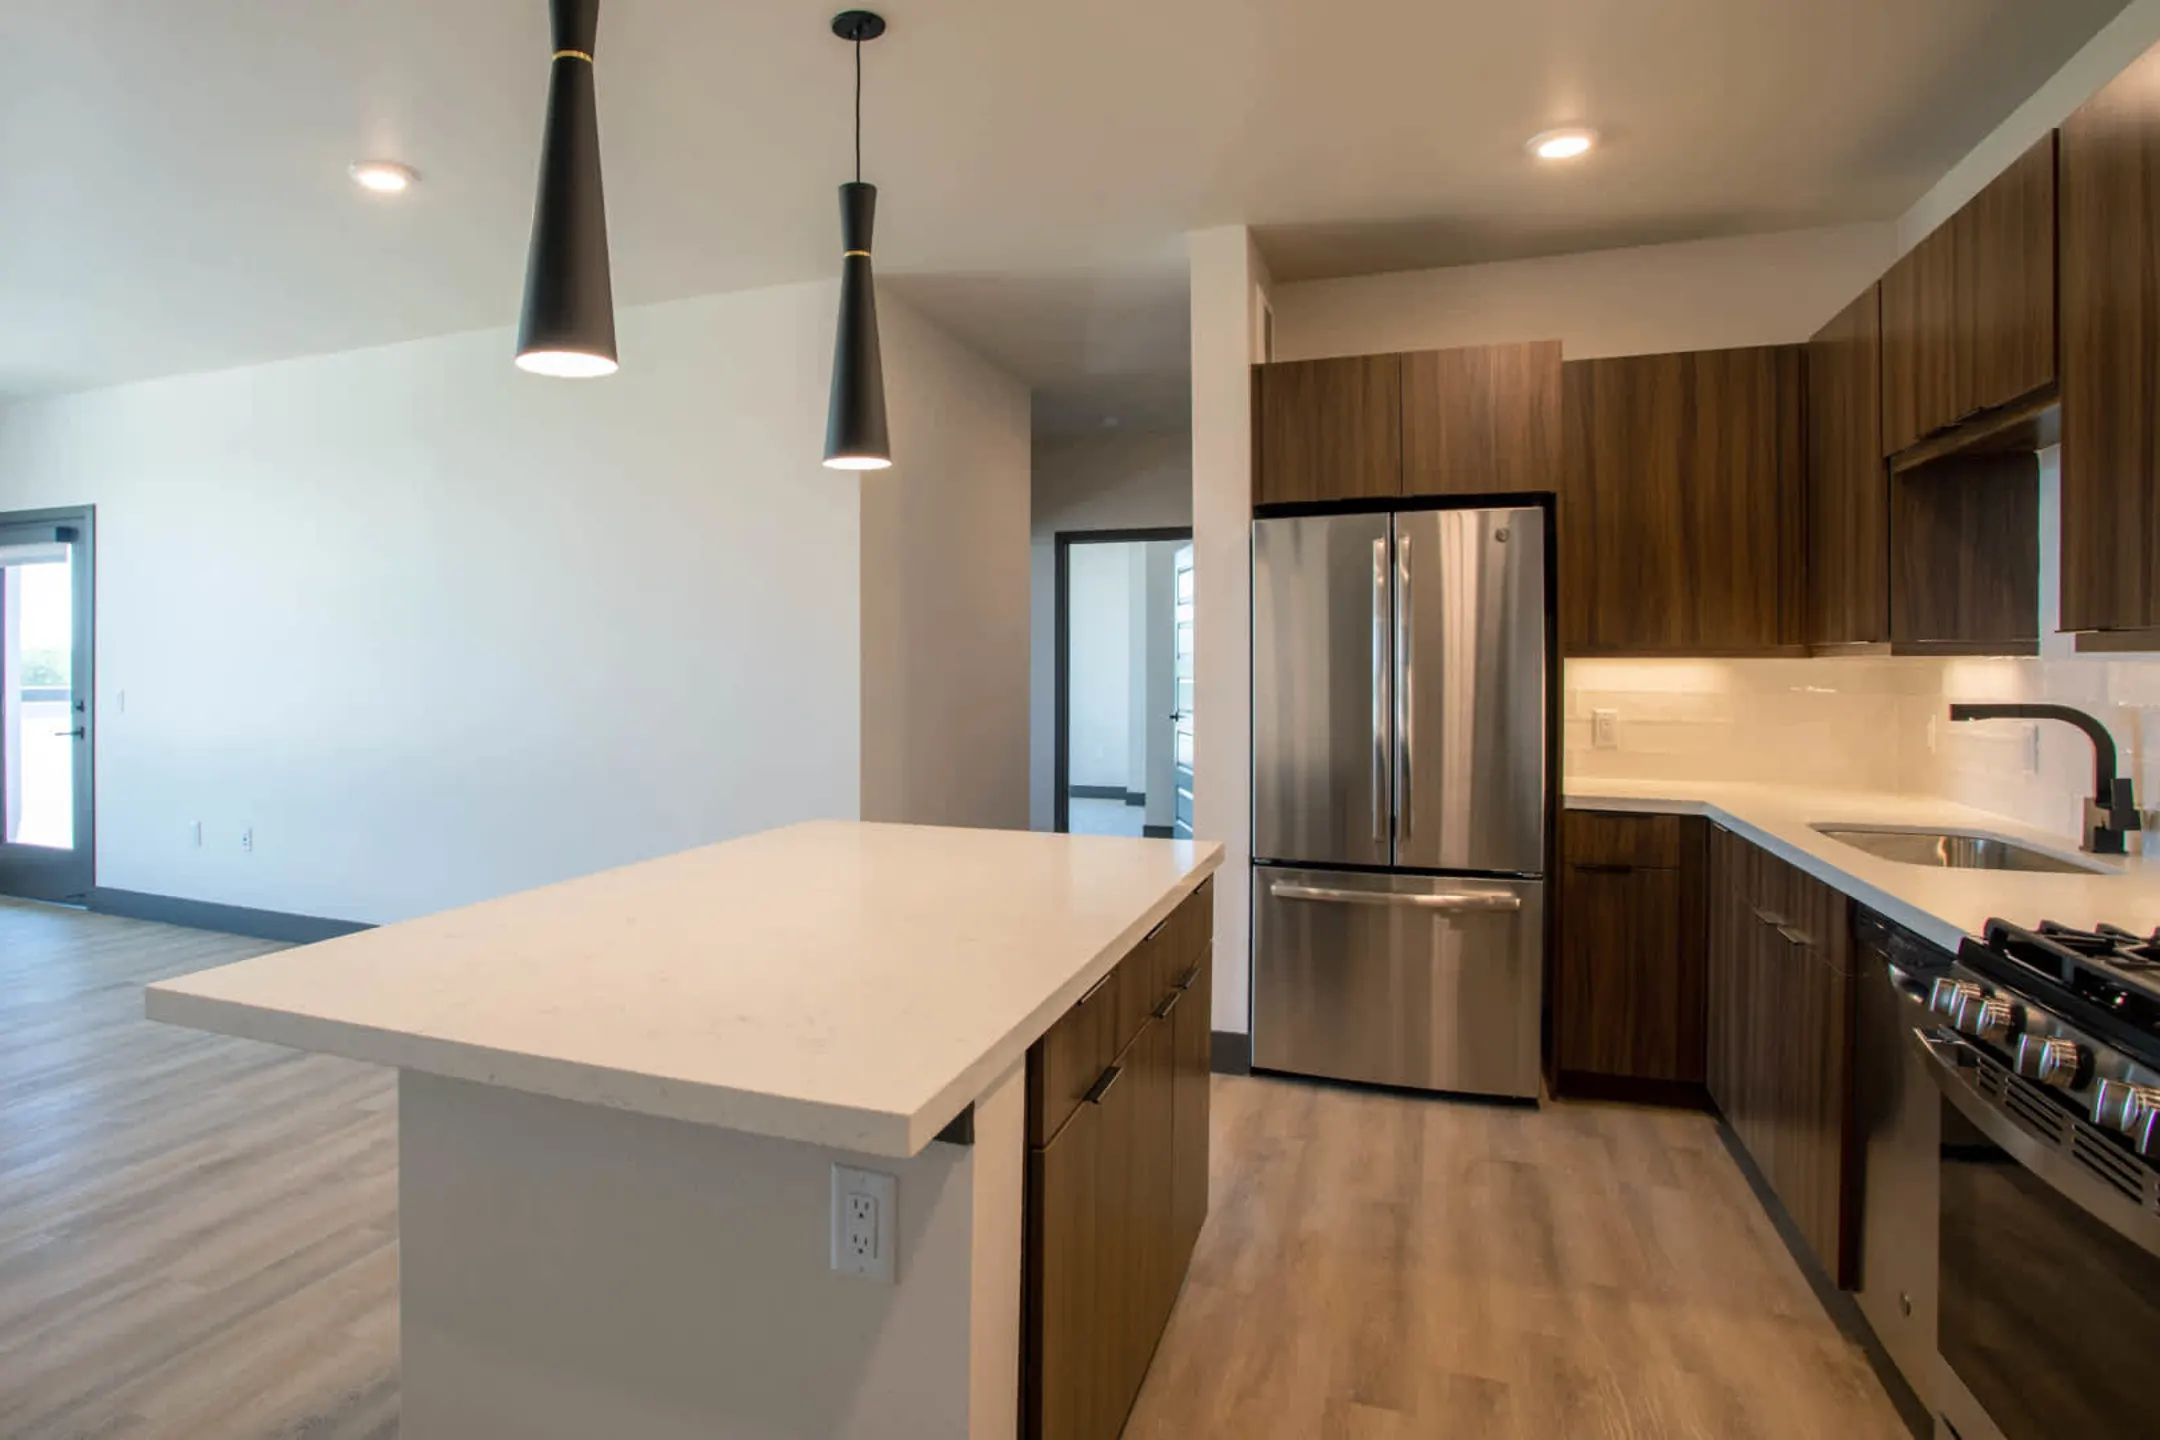 Kitchen - Circa Fitzsimons Apartments - Denver, CO